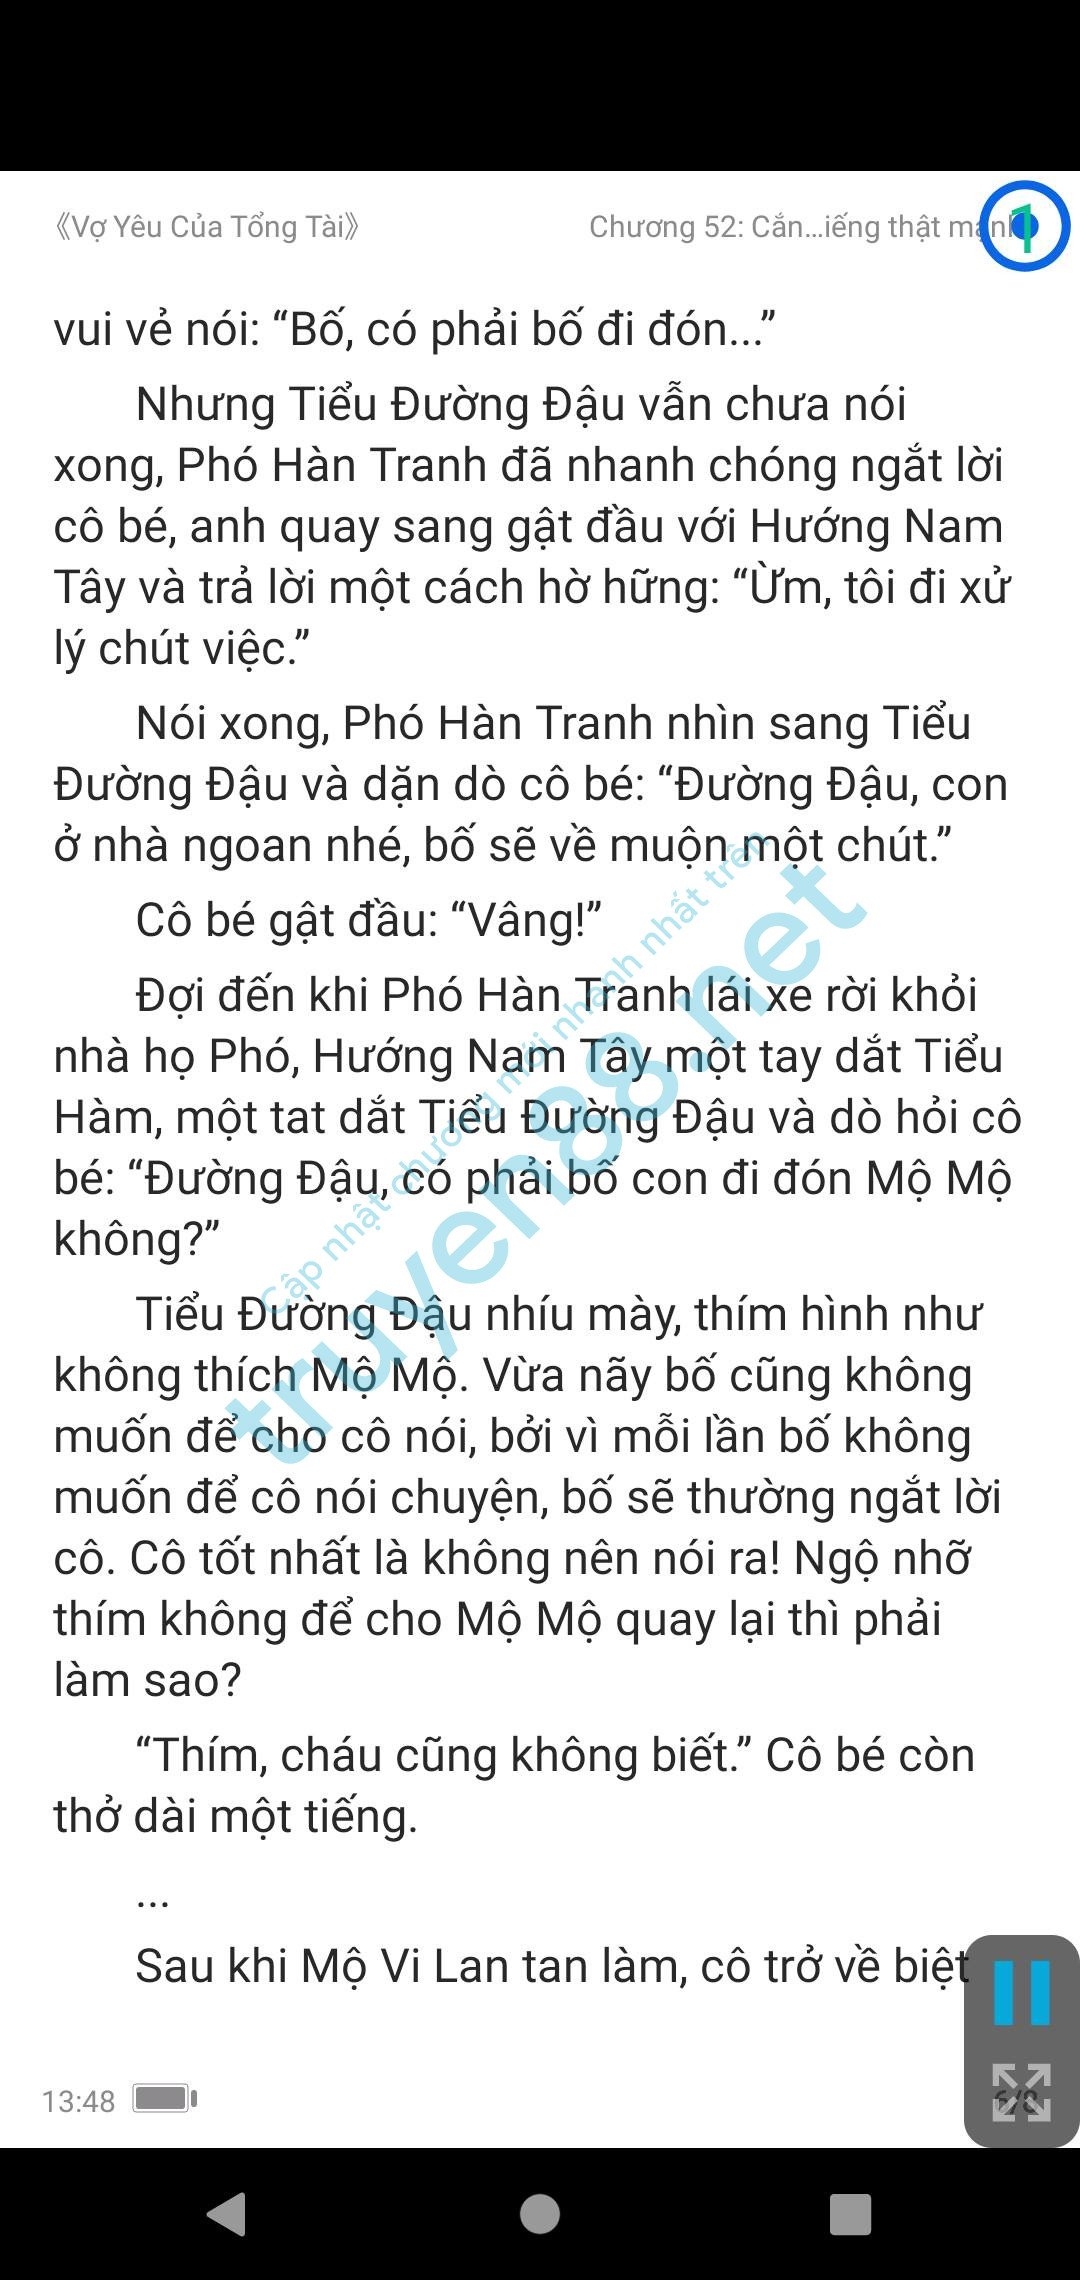 vo-yeu-cua-tong-tai-mo-vi-lan--pho-han-tranh-52-0